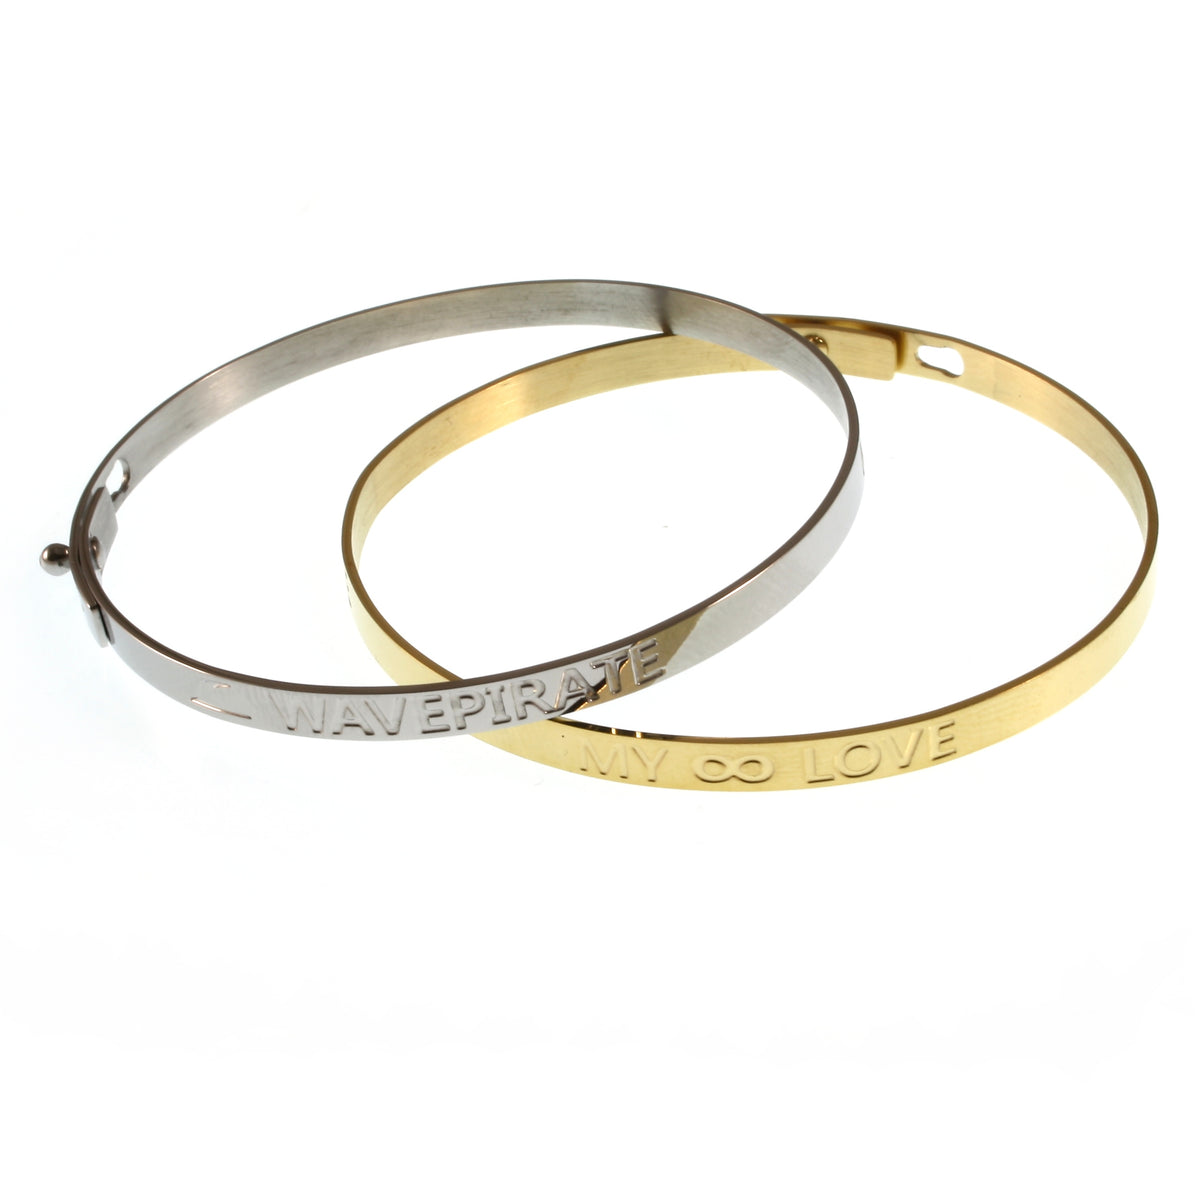 Damen-Edelstahl-armreif-glam-armband-graviert-my-love-set-silber-gold-verstellbar-vorn-wavepirate-shop